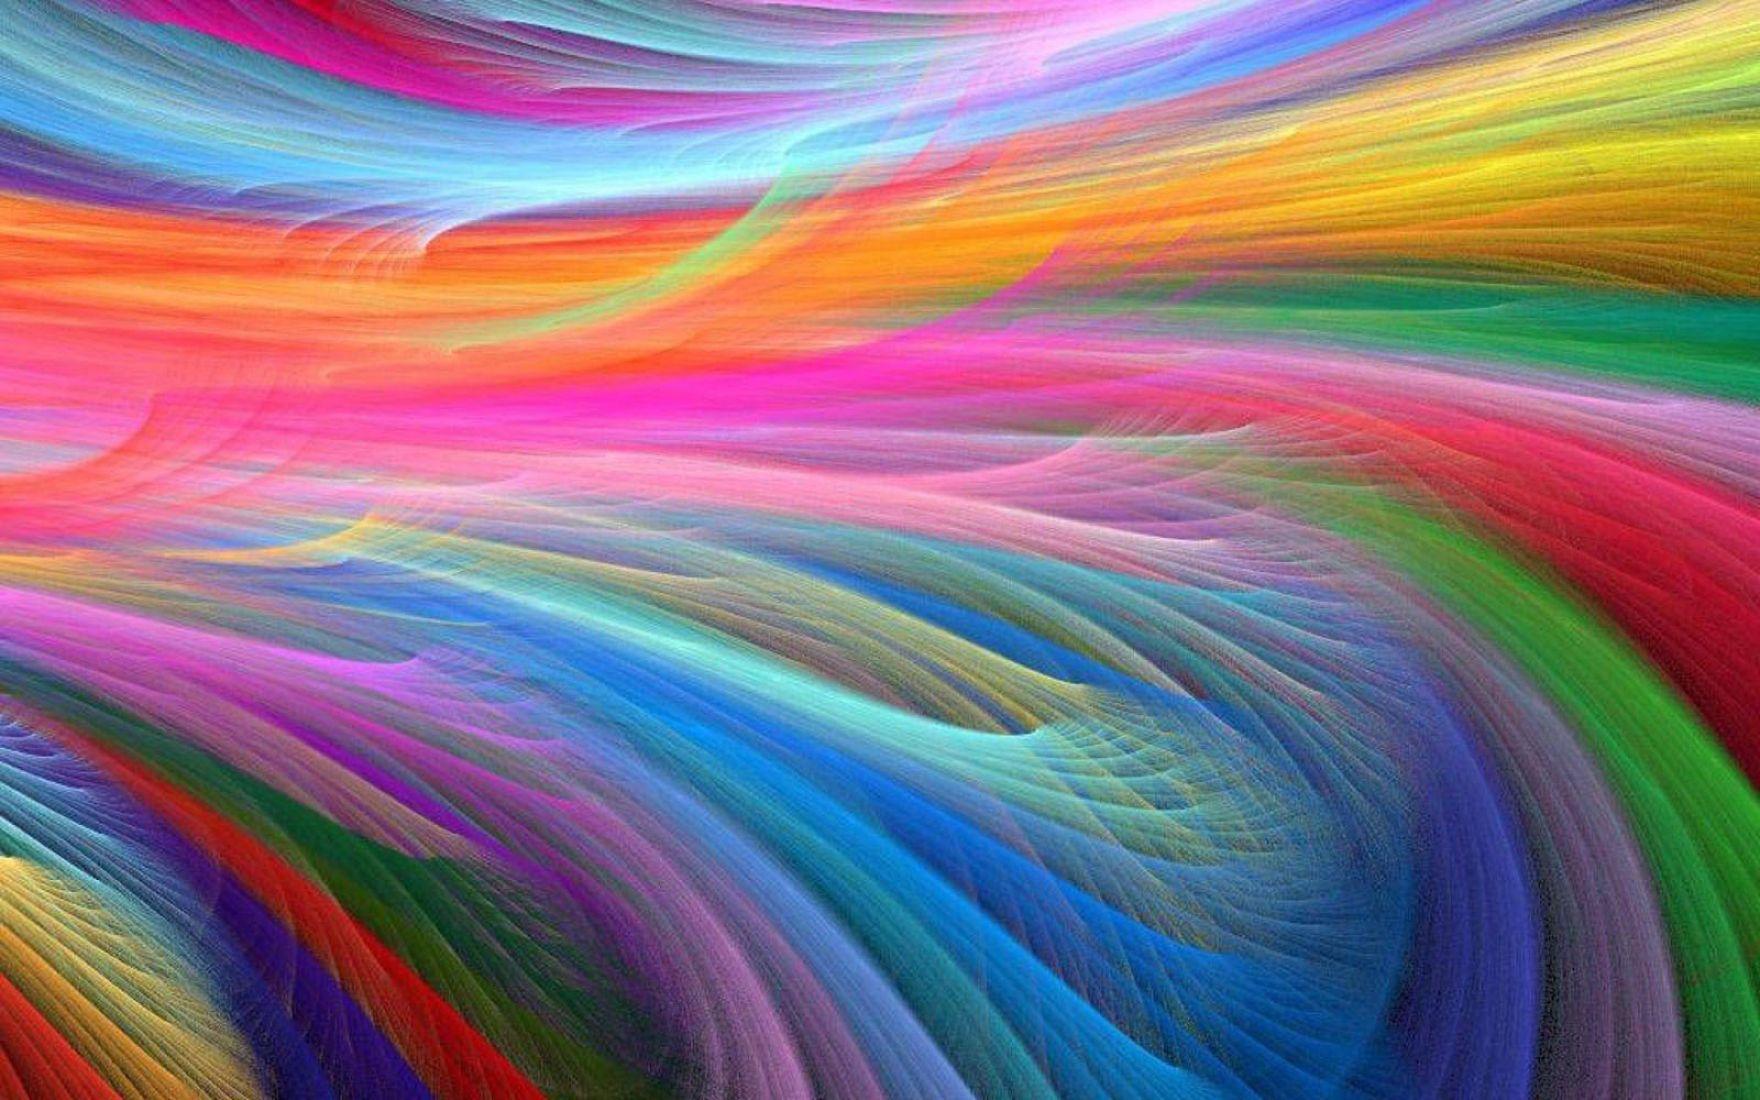 Colorful Abstract Art Desktop Wallpaper: Desktop HD Wallpaper Free Image, Picture, Photo on DailyHDWallpaper.com